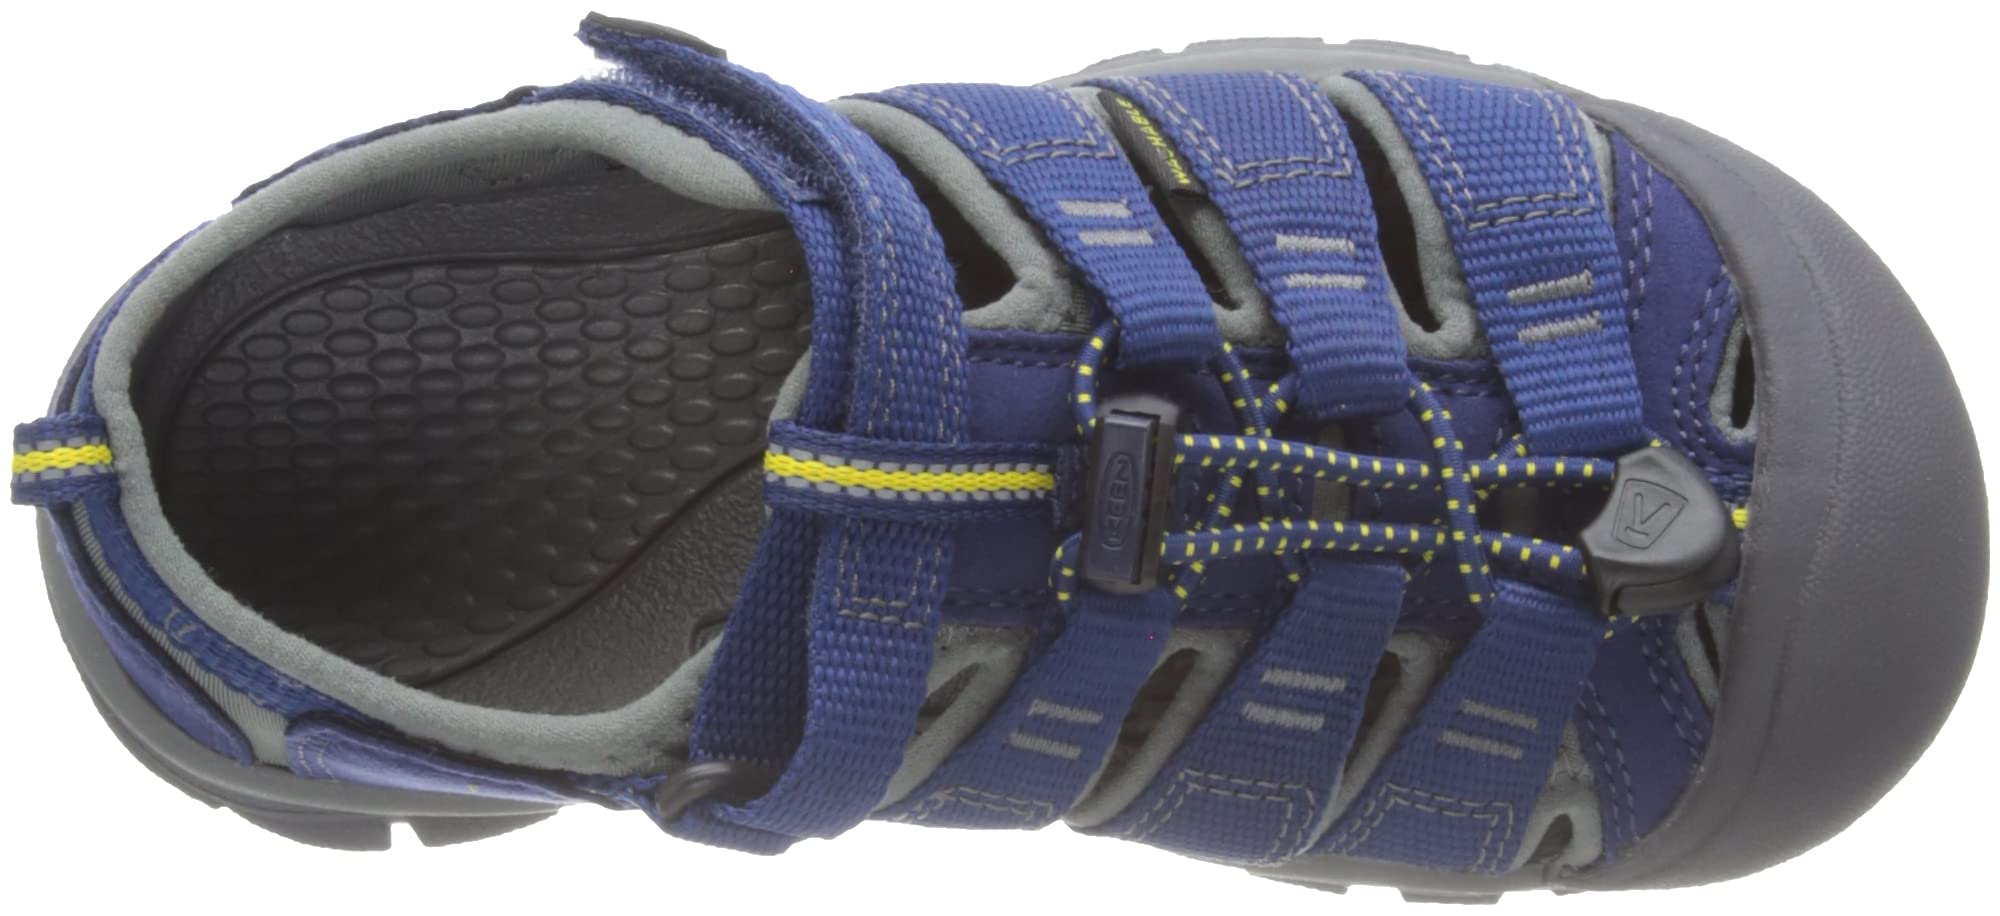 KEEN Unisex-Child Newport H2 Closed Toe Water Sandals, Blue Depths/Gargoyle, 6 Big Kid US